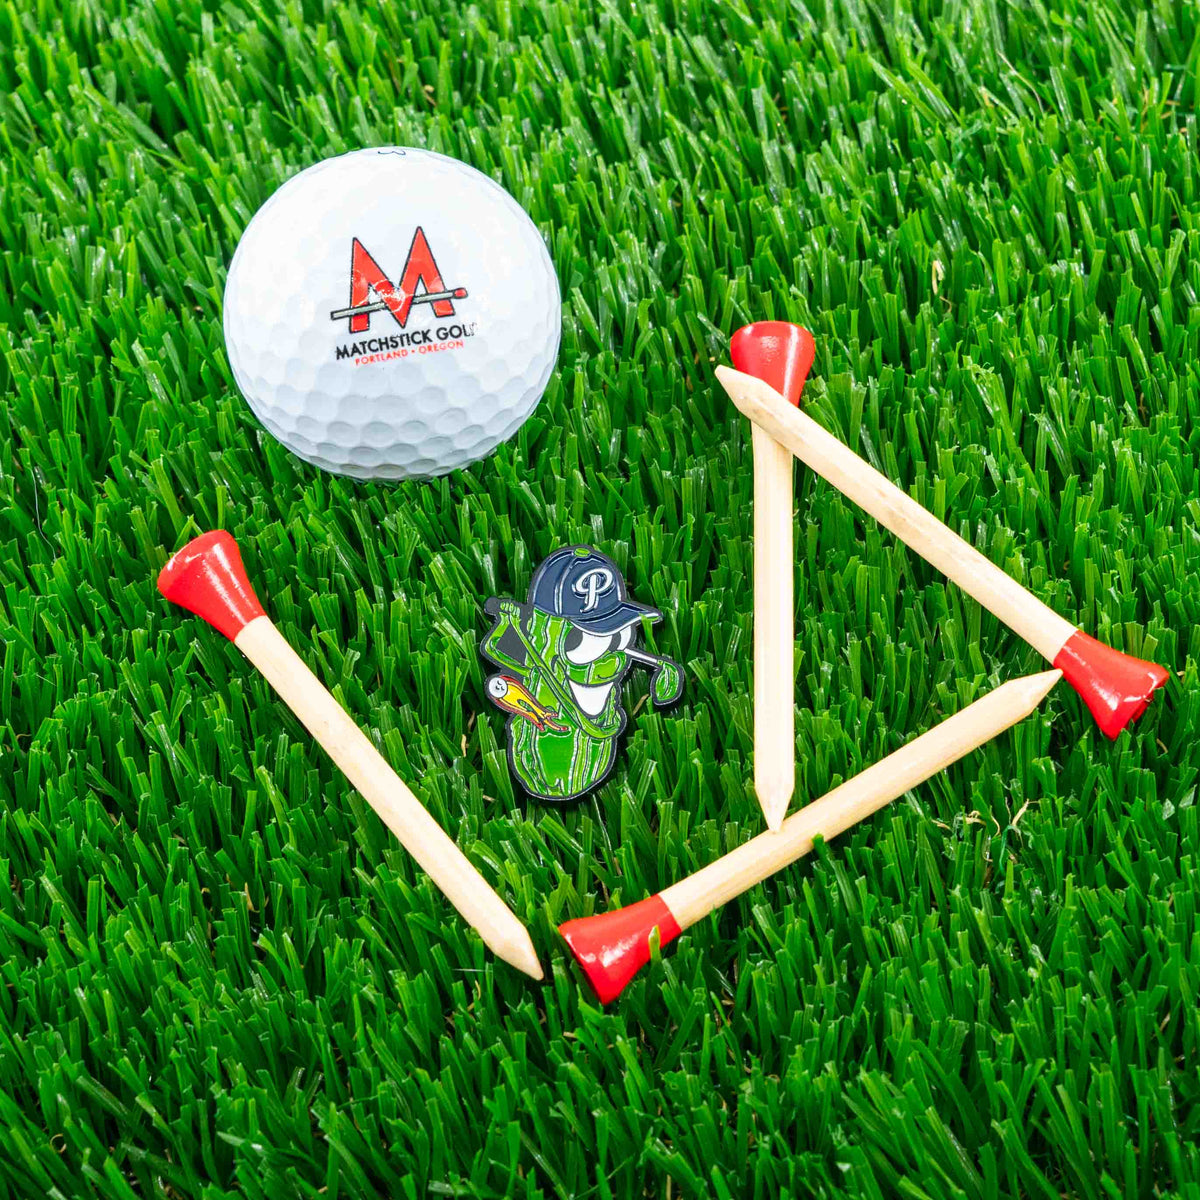 portland pickles golf ball marker dillon t pickle golf tees grass ball